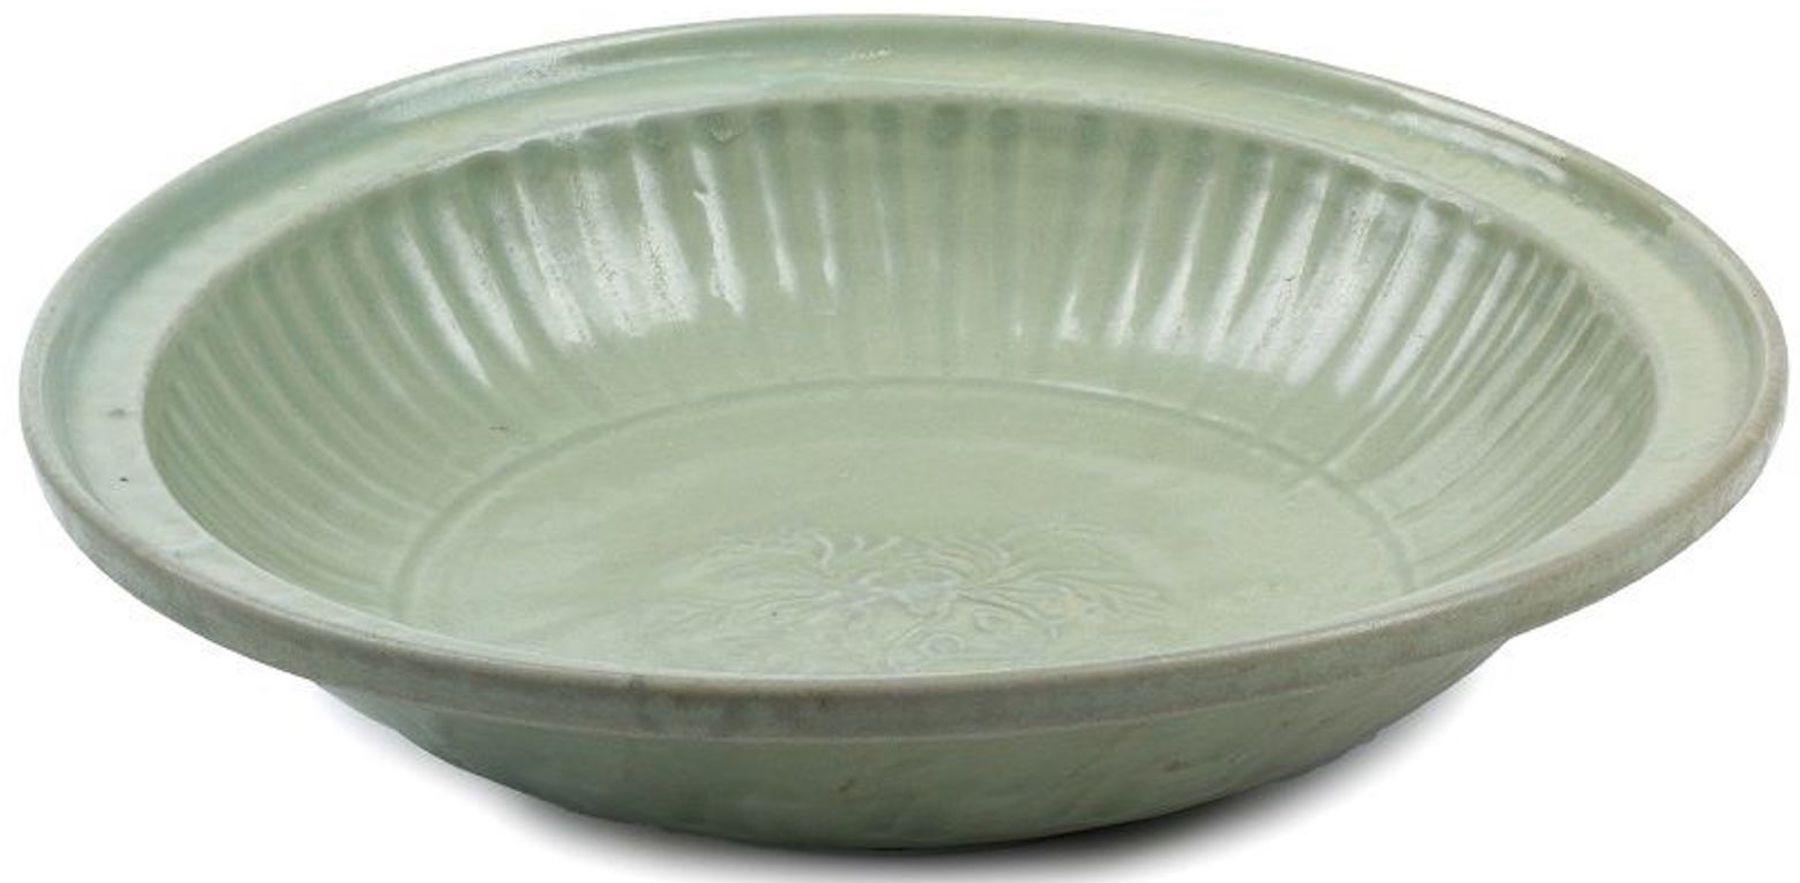 Chinese Ancient Glazed Ceramic Dish, Ming Dynasty China